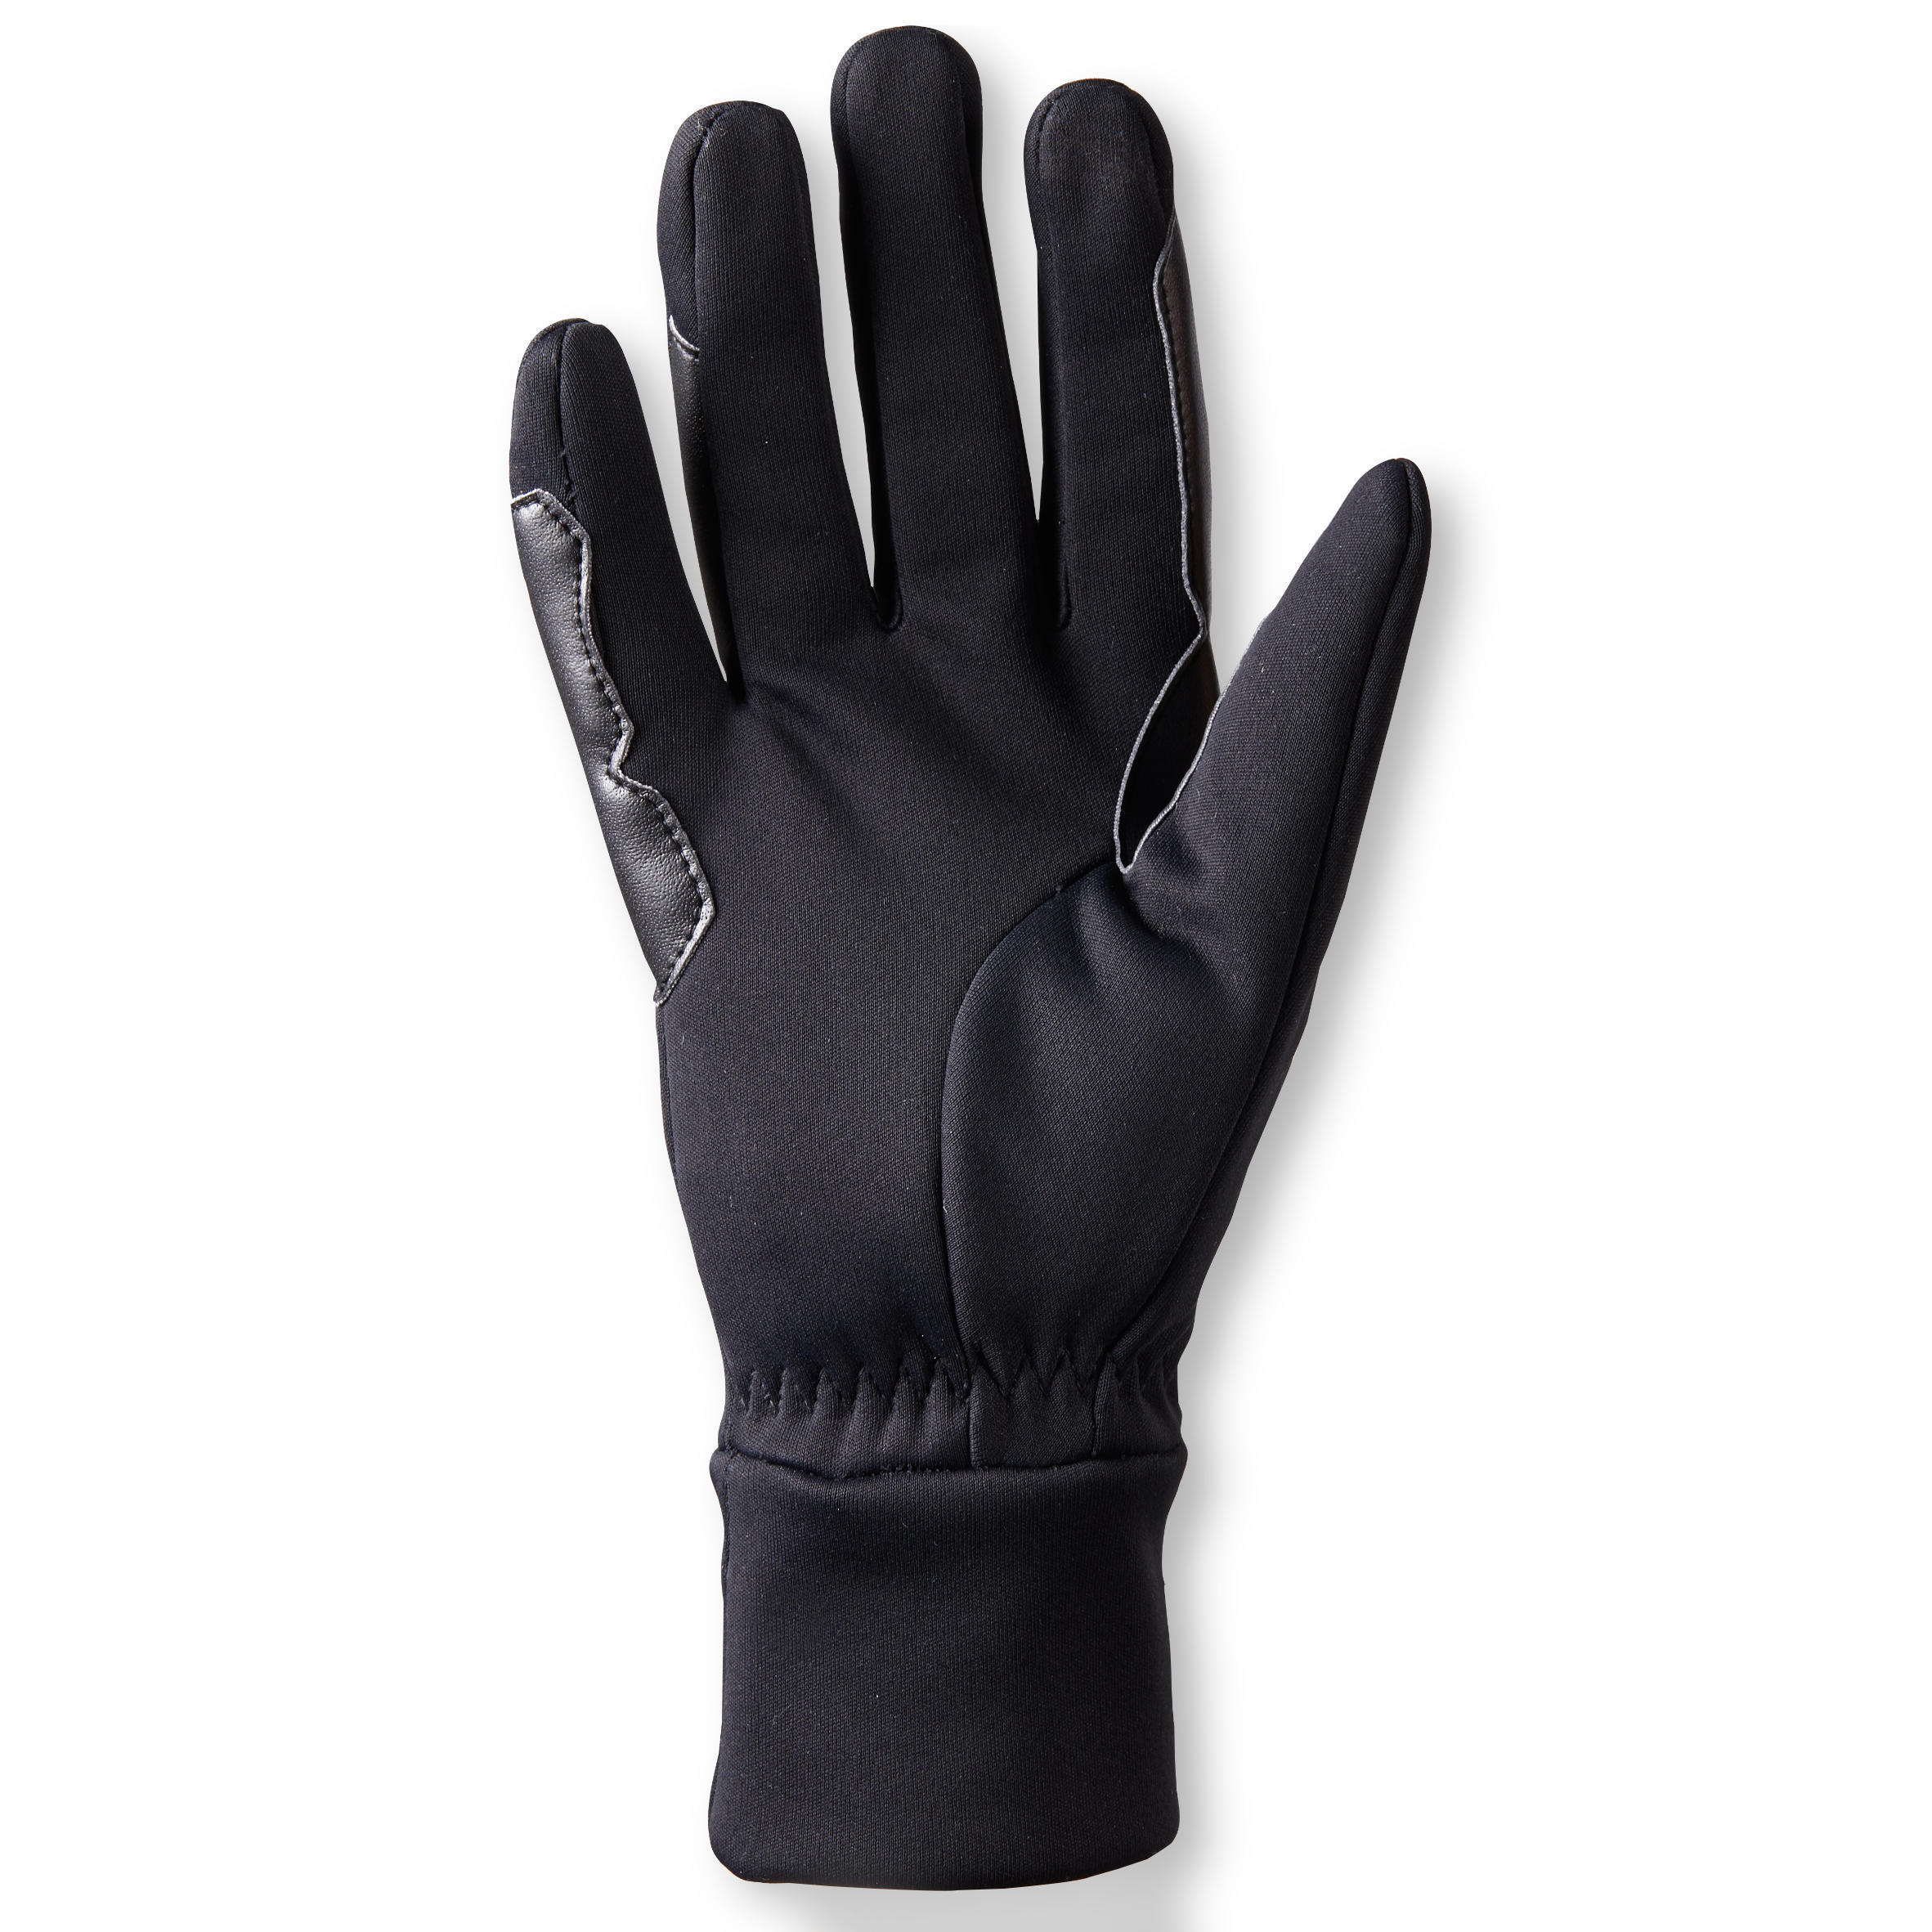 100 Warm Women's Horse Riding Gloves - Black 2/7